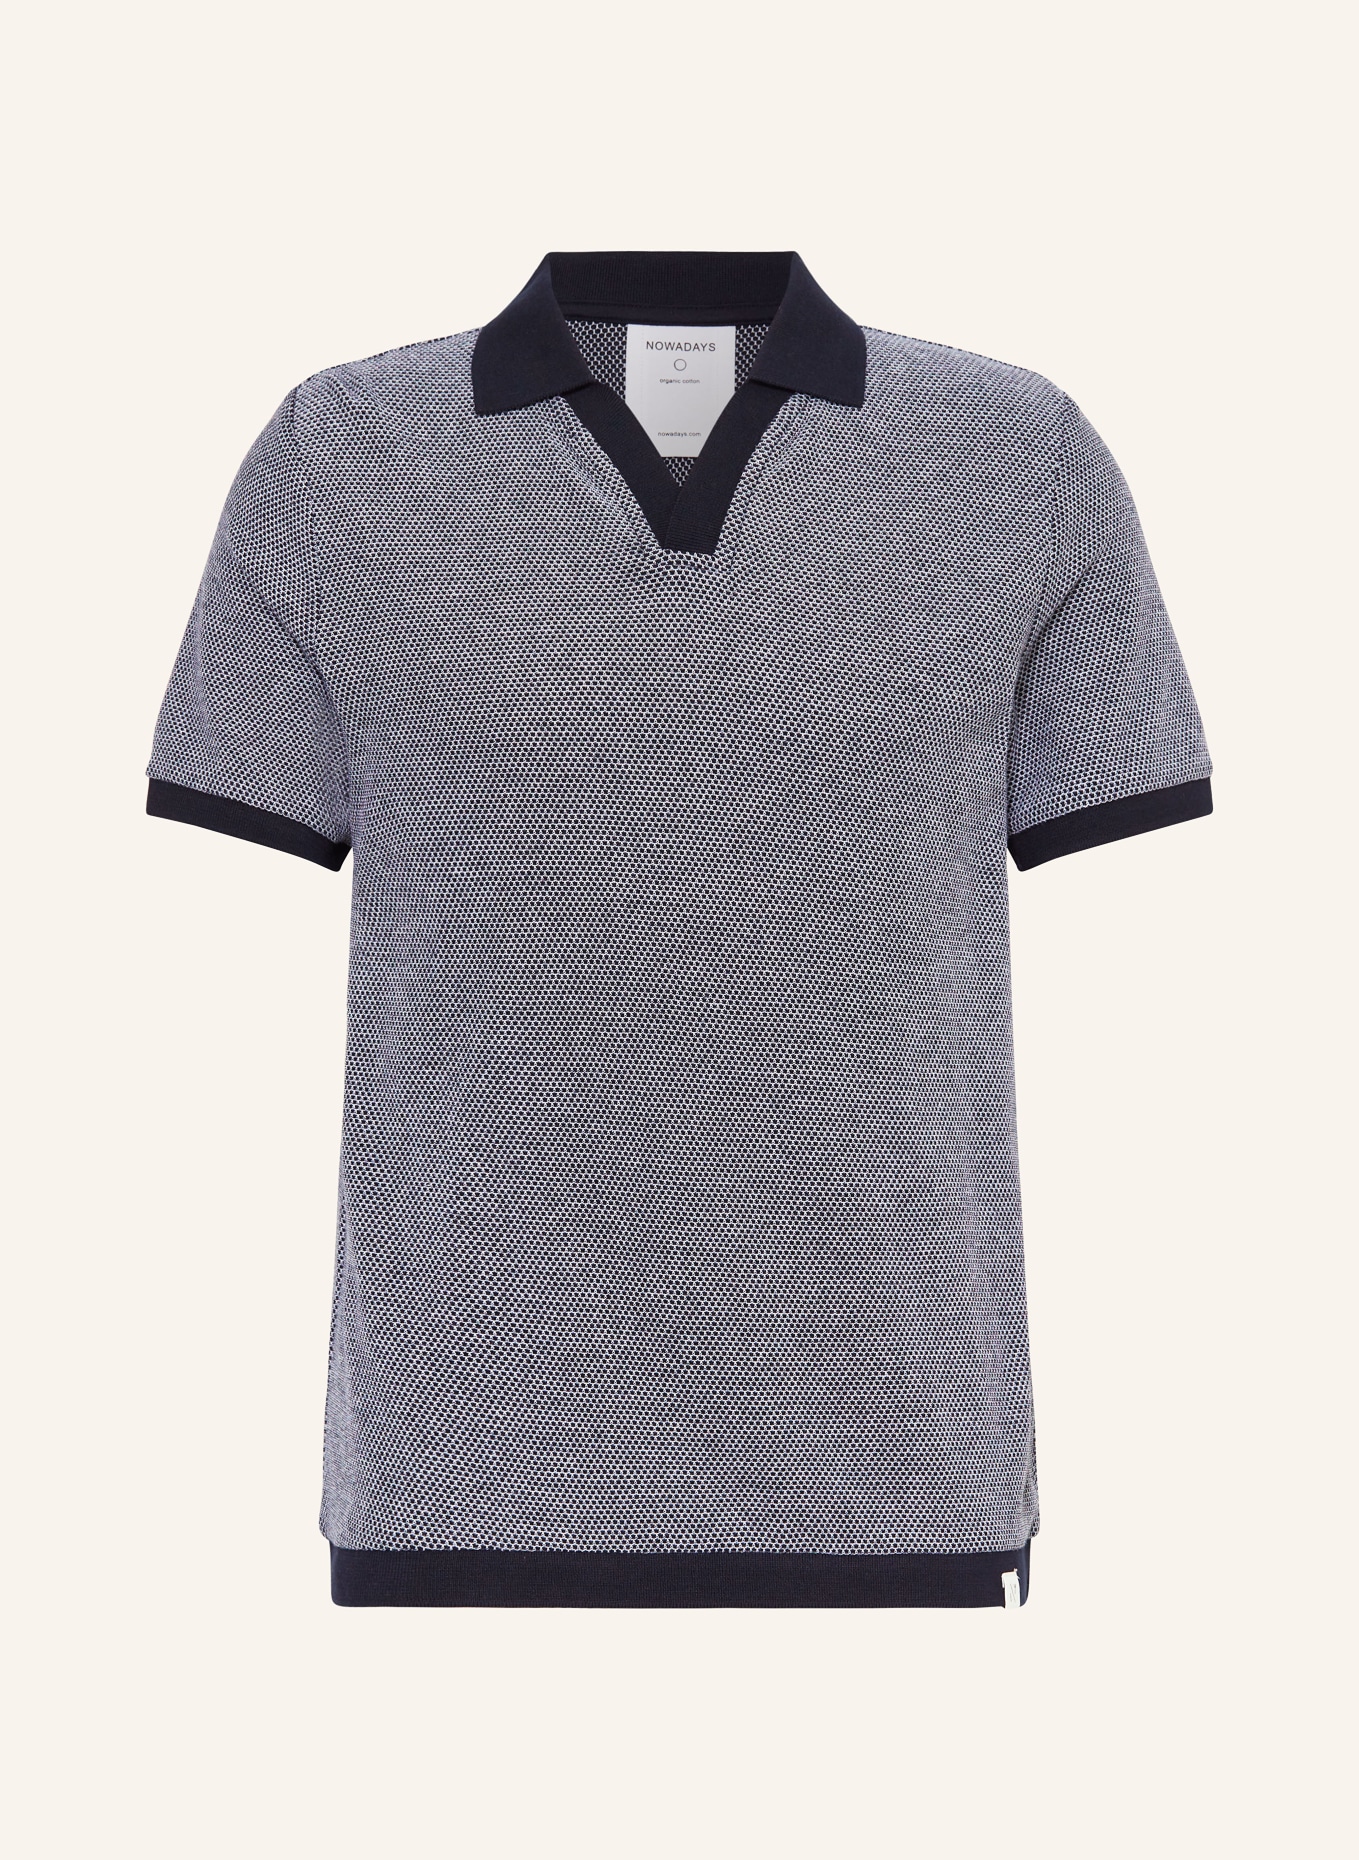 NOWADAYS Piqué-Poloshirt, Farbe: DUNKELBLAU (Bild 1)